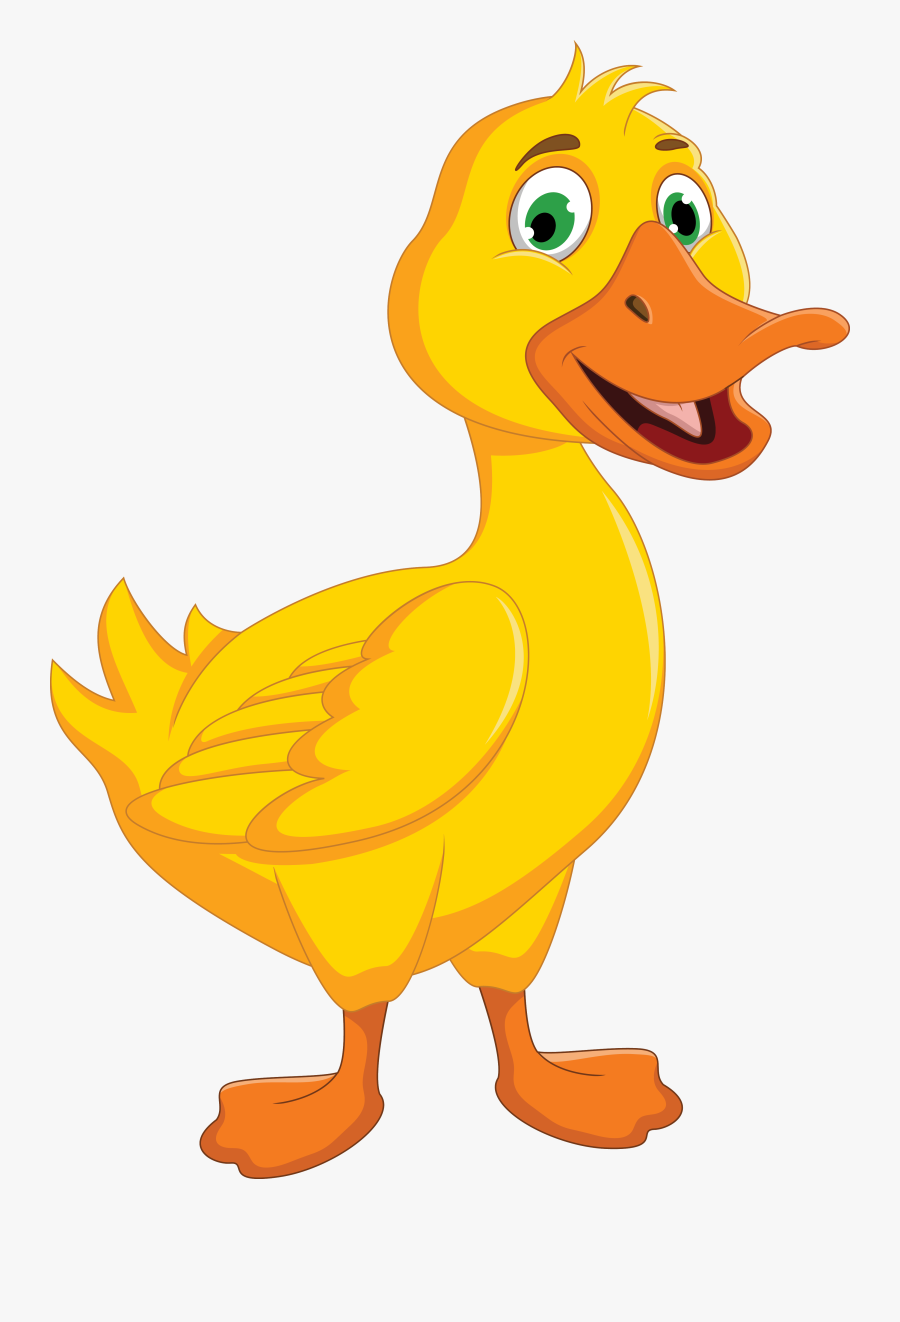 Wings Clipart Duck - Duck Cartoon Png, Transparent Clipart